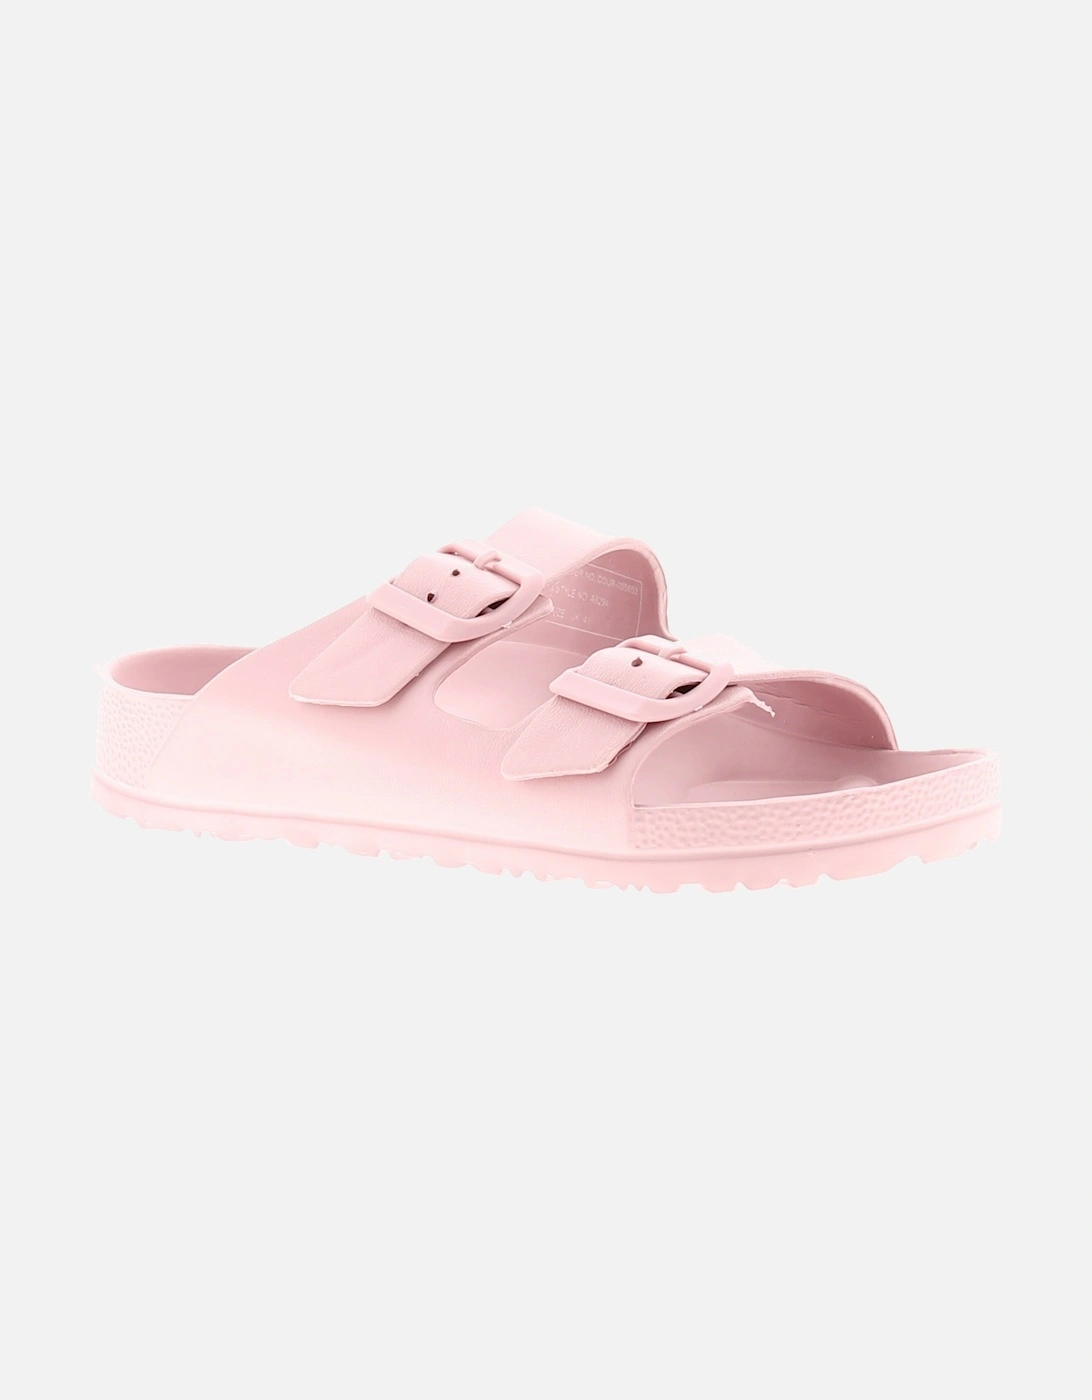 Girls Sandals Sliders Duplex Slip On pink UK Size, 6 of 5